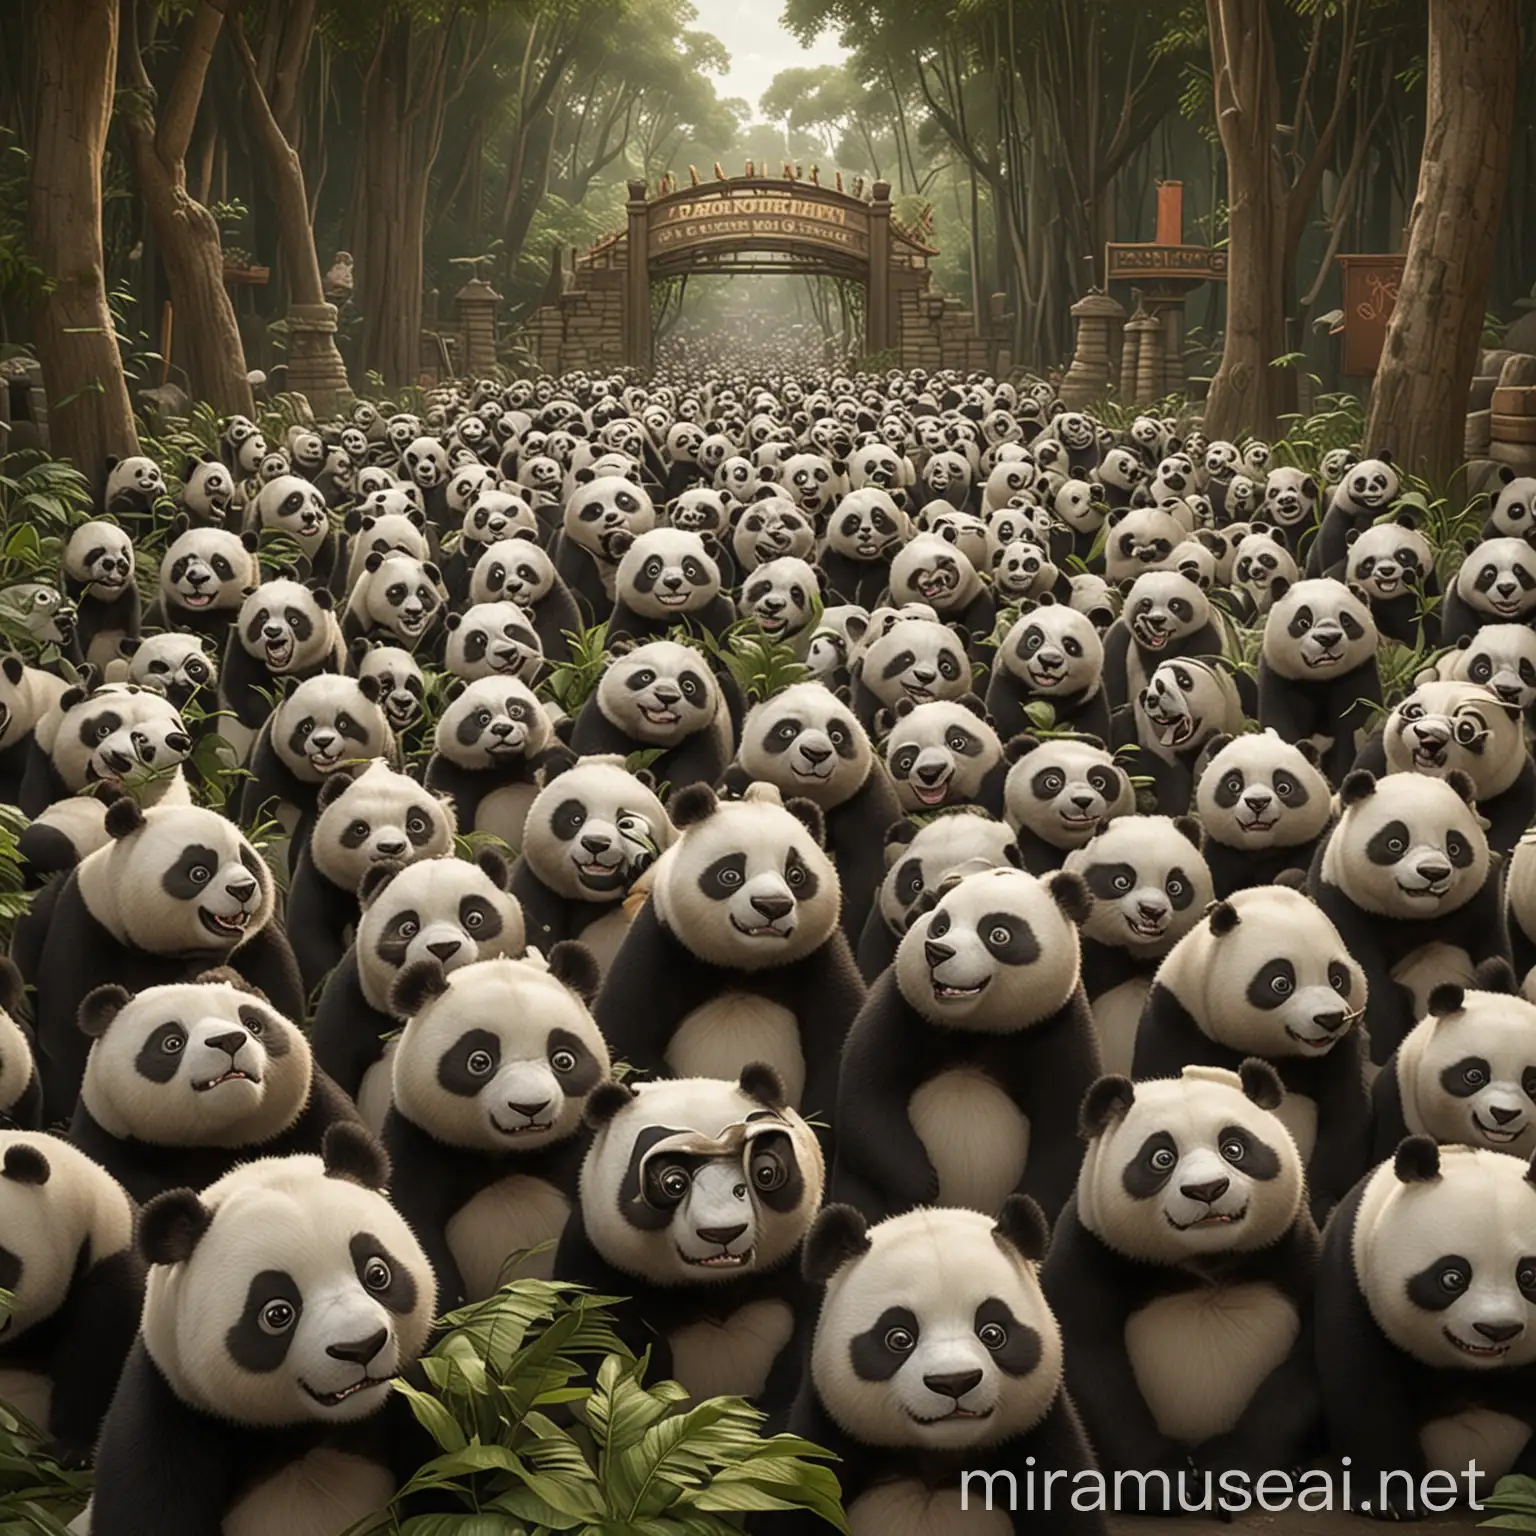 Vibrant PixarStyle Zoo 200 Playful Pandas